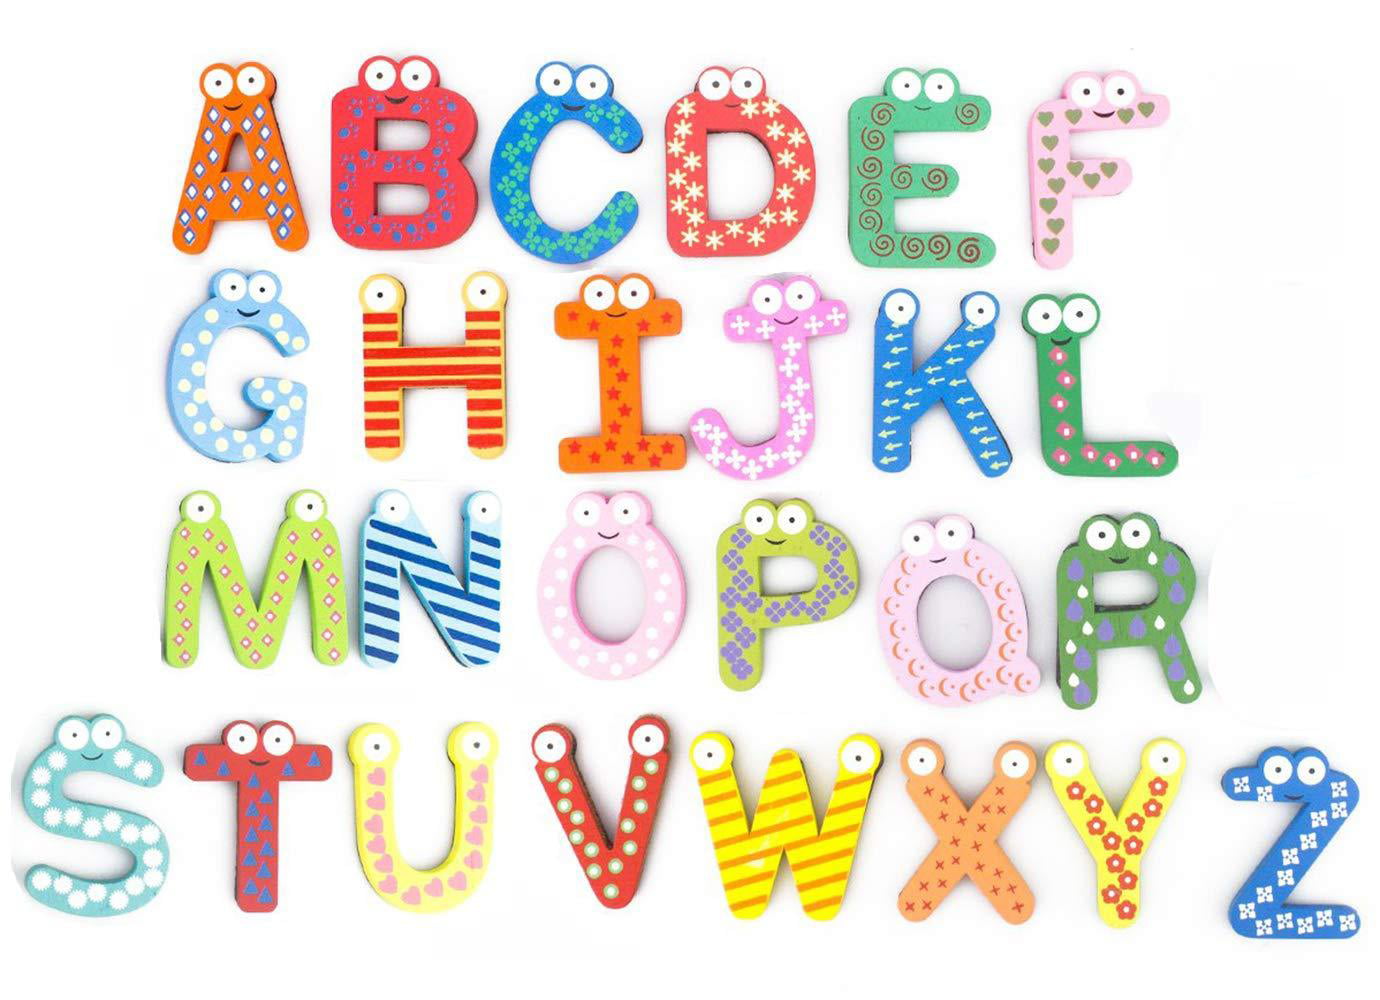 26pcs Wooden Magnet ABC Learning Alphabet Letter Magnets Fridge Child Kids Toys 